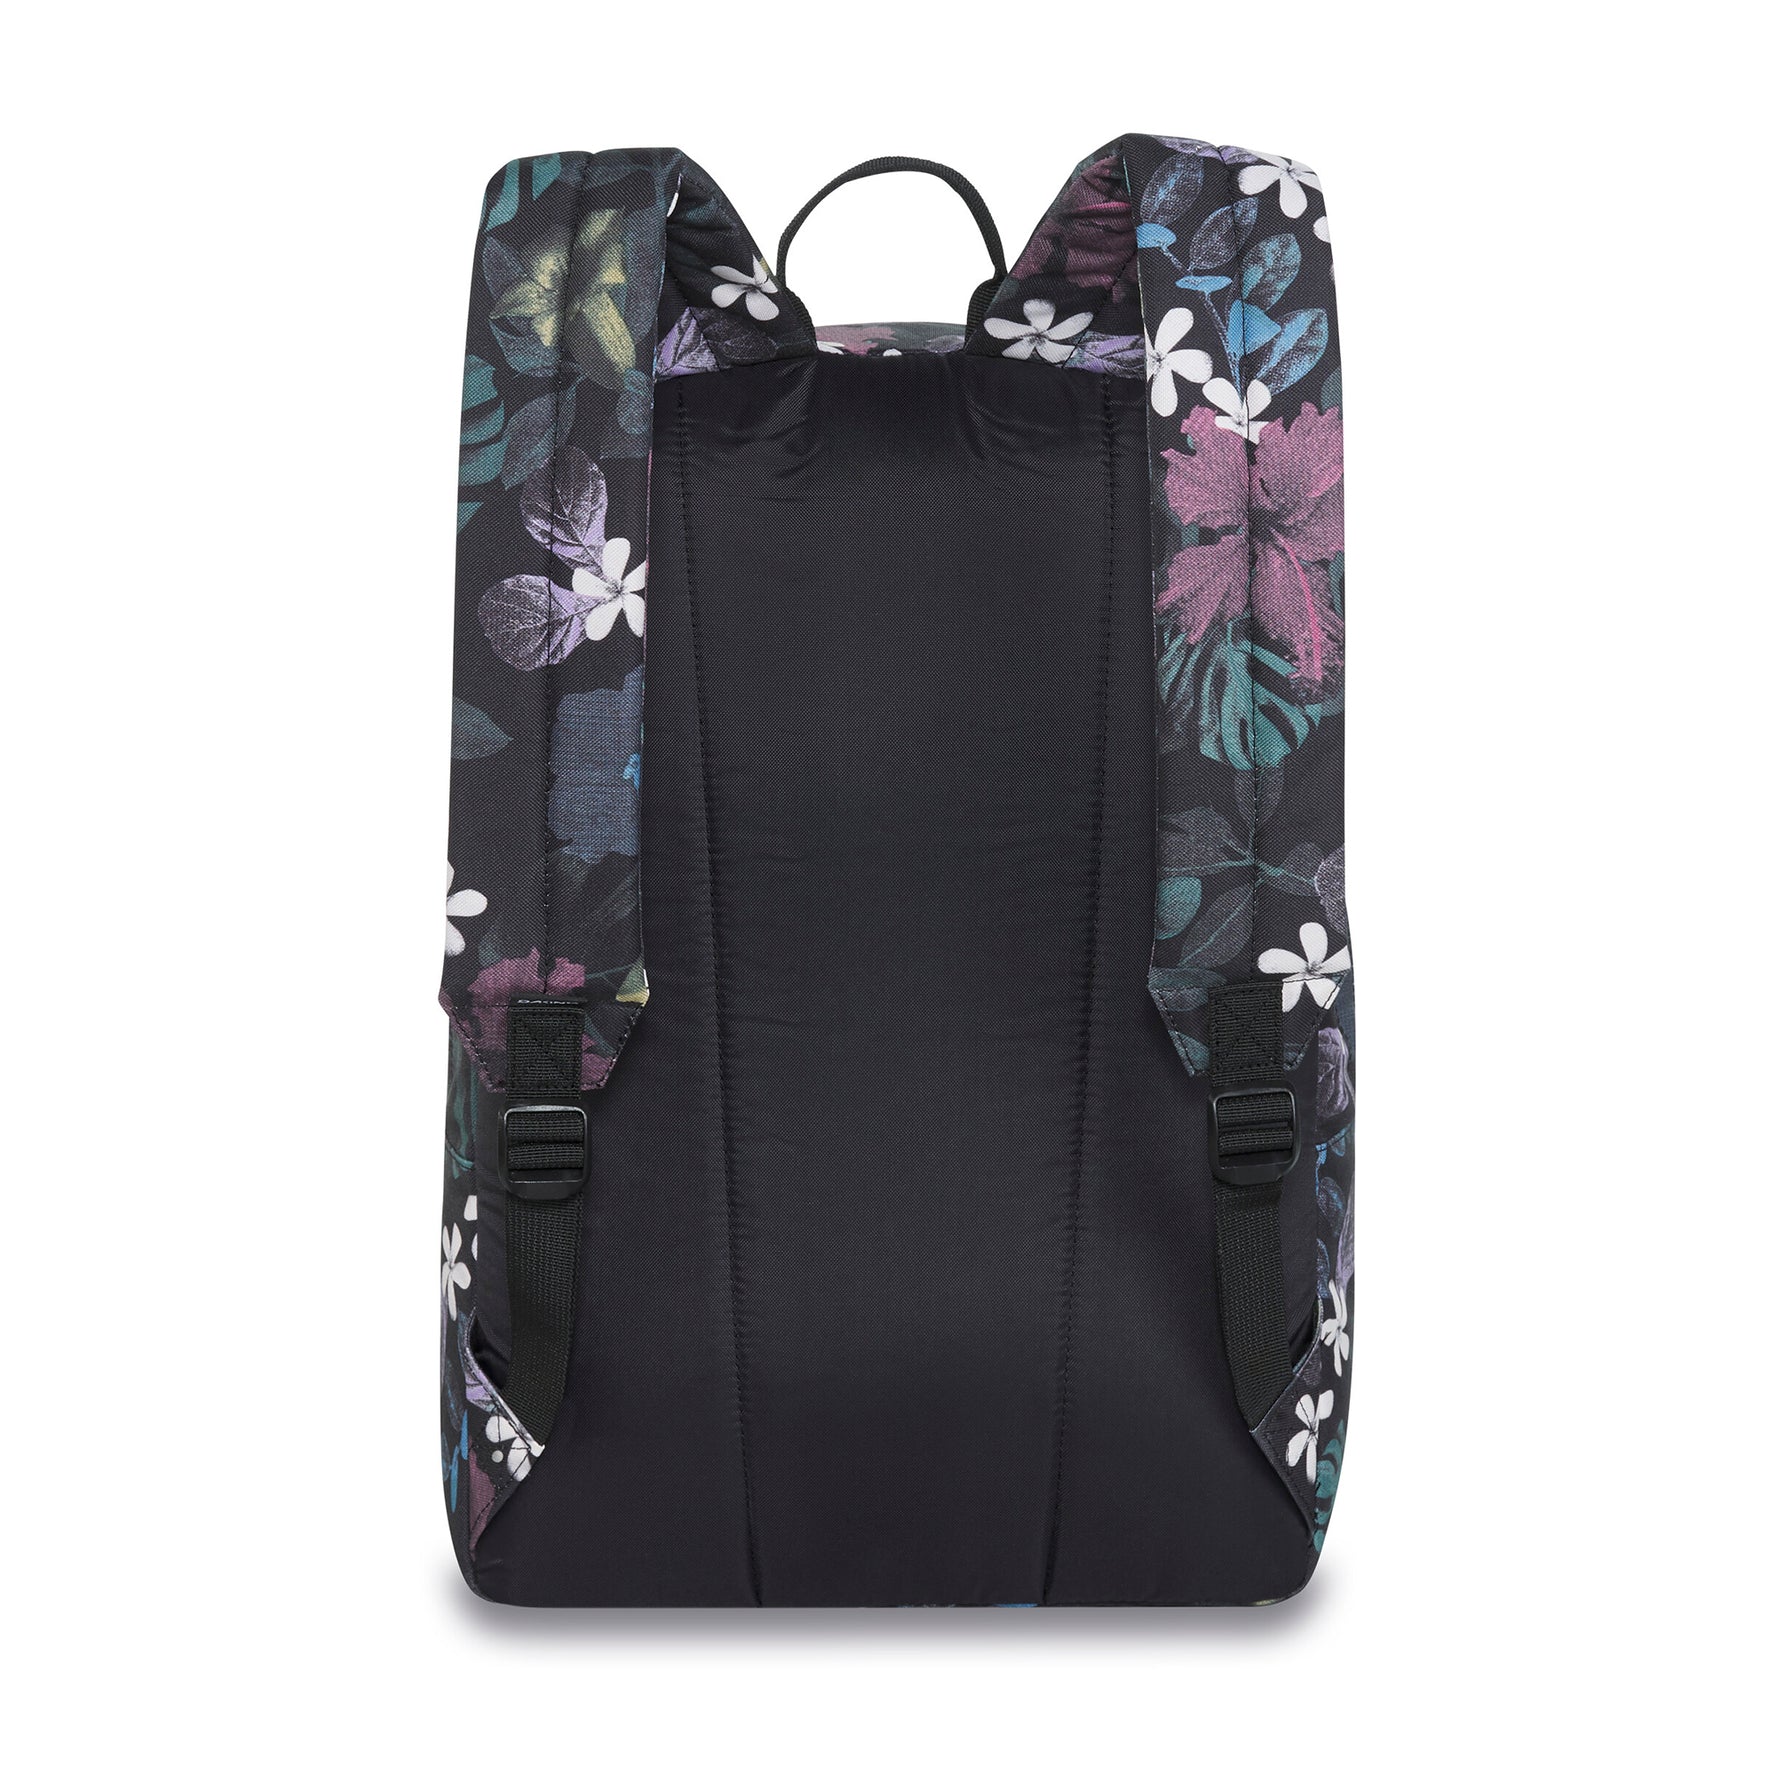 365 Pack Backpack-Backpack-Dakine-Tropic Dusk-SchoolBagsAndStuff